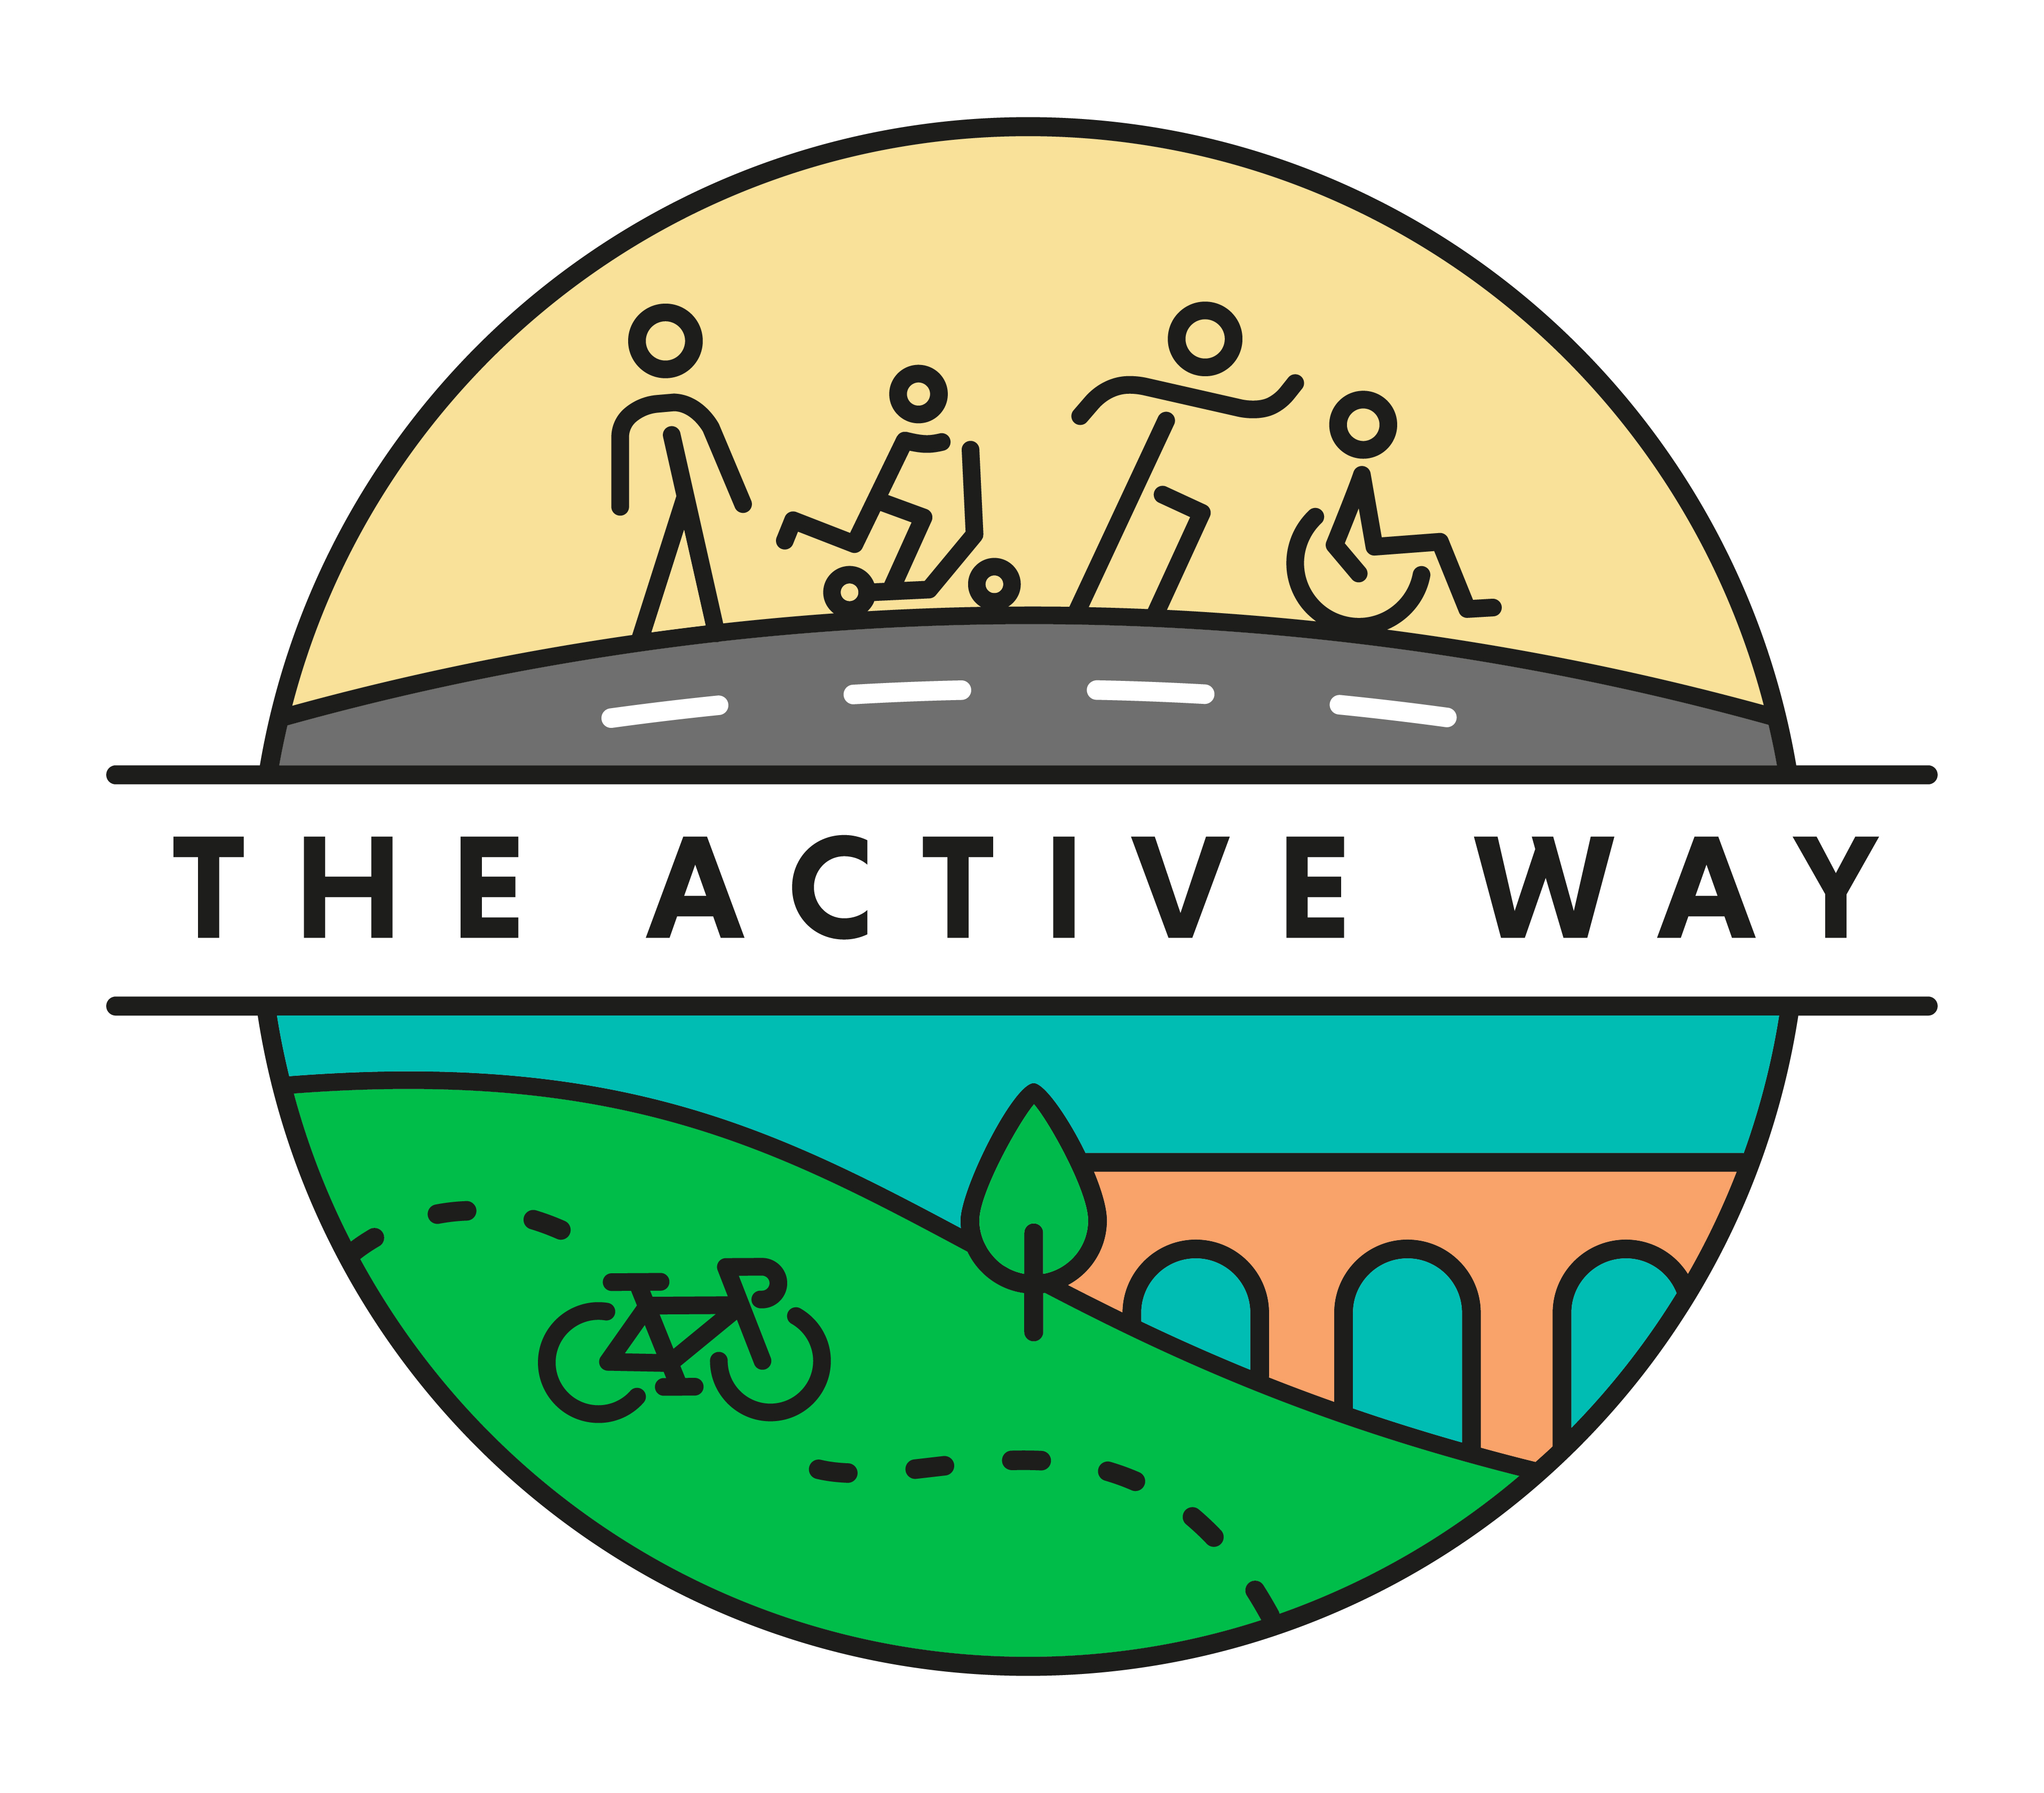 The Active Way logo